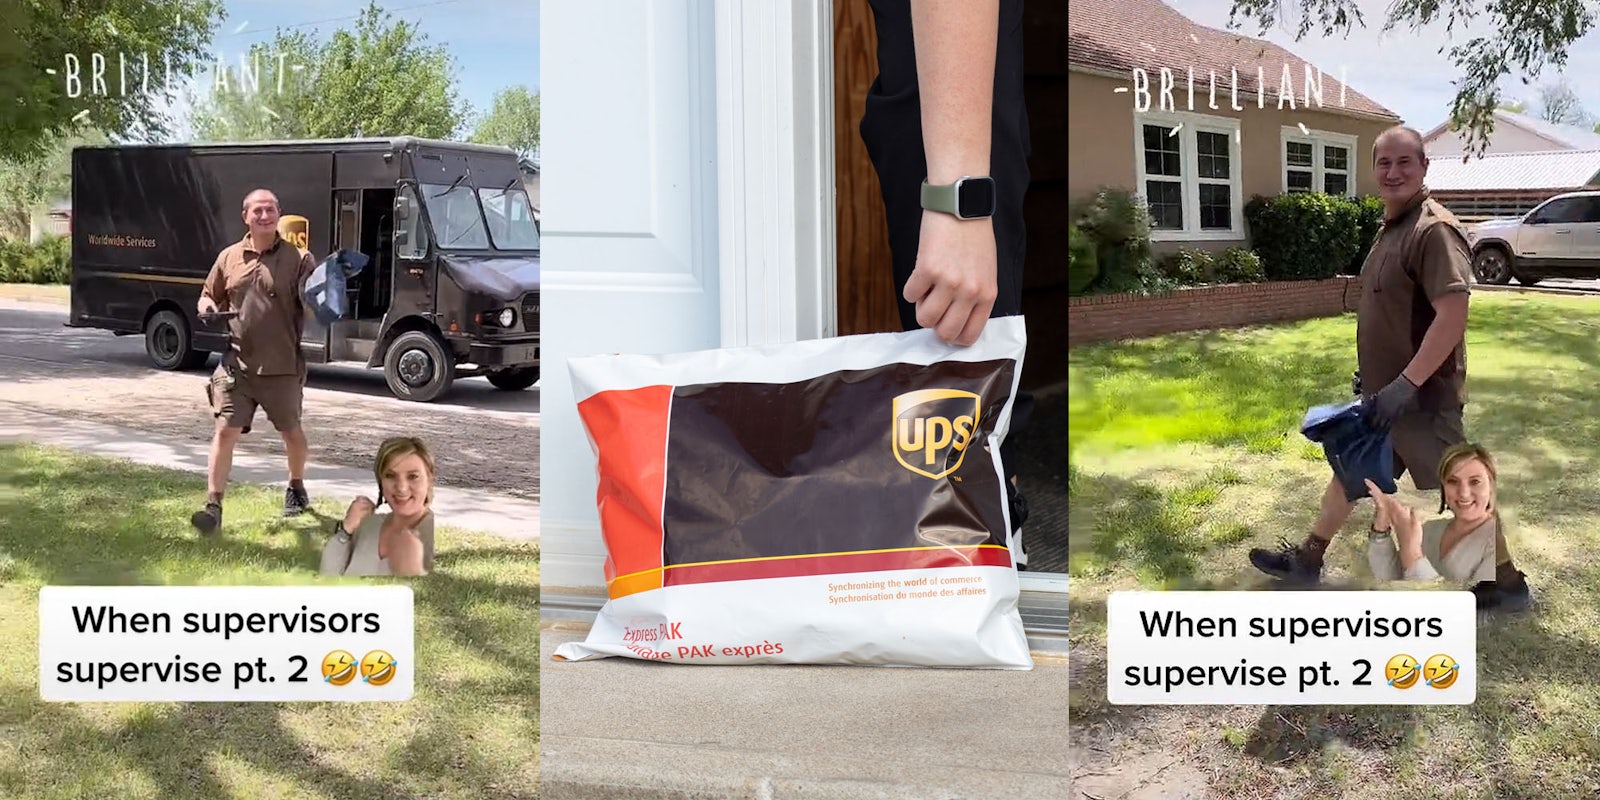 UPS driver delivering package waking on yard caption 'When supervisors supervise' (l) Hand grabbing UPS package from front porch (c) UPS driver delivering package walking on yard caption 'When supervisors supervise' (r)